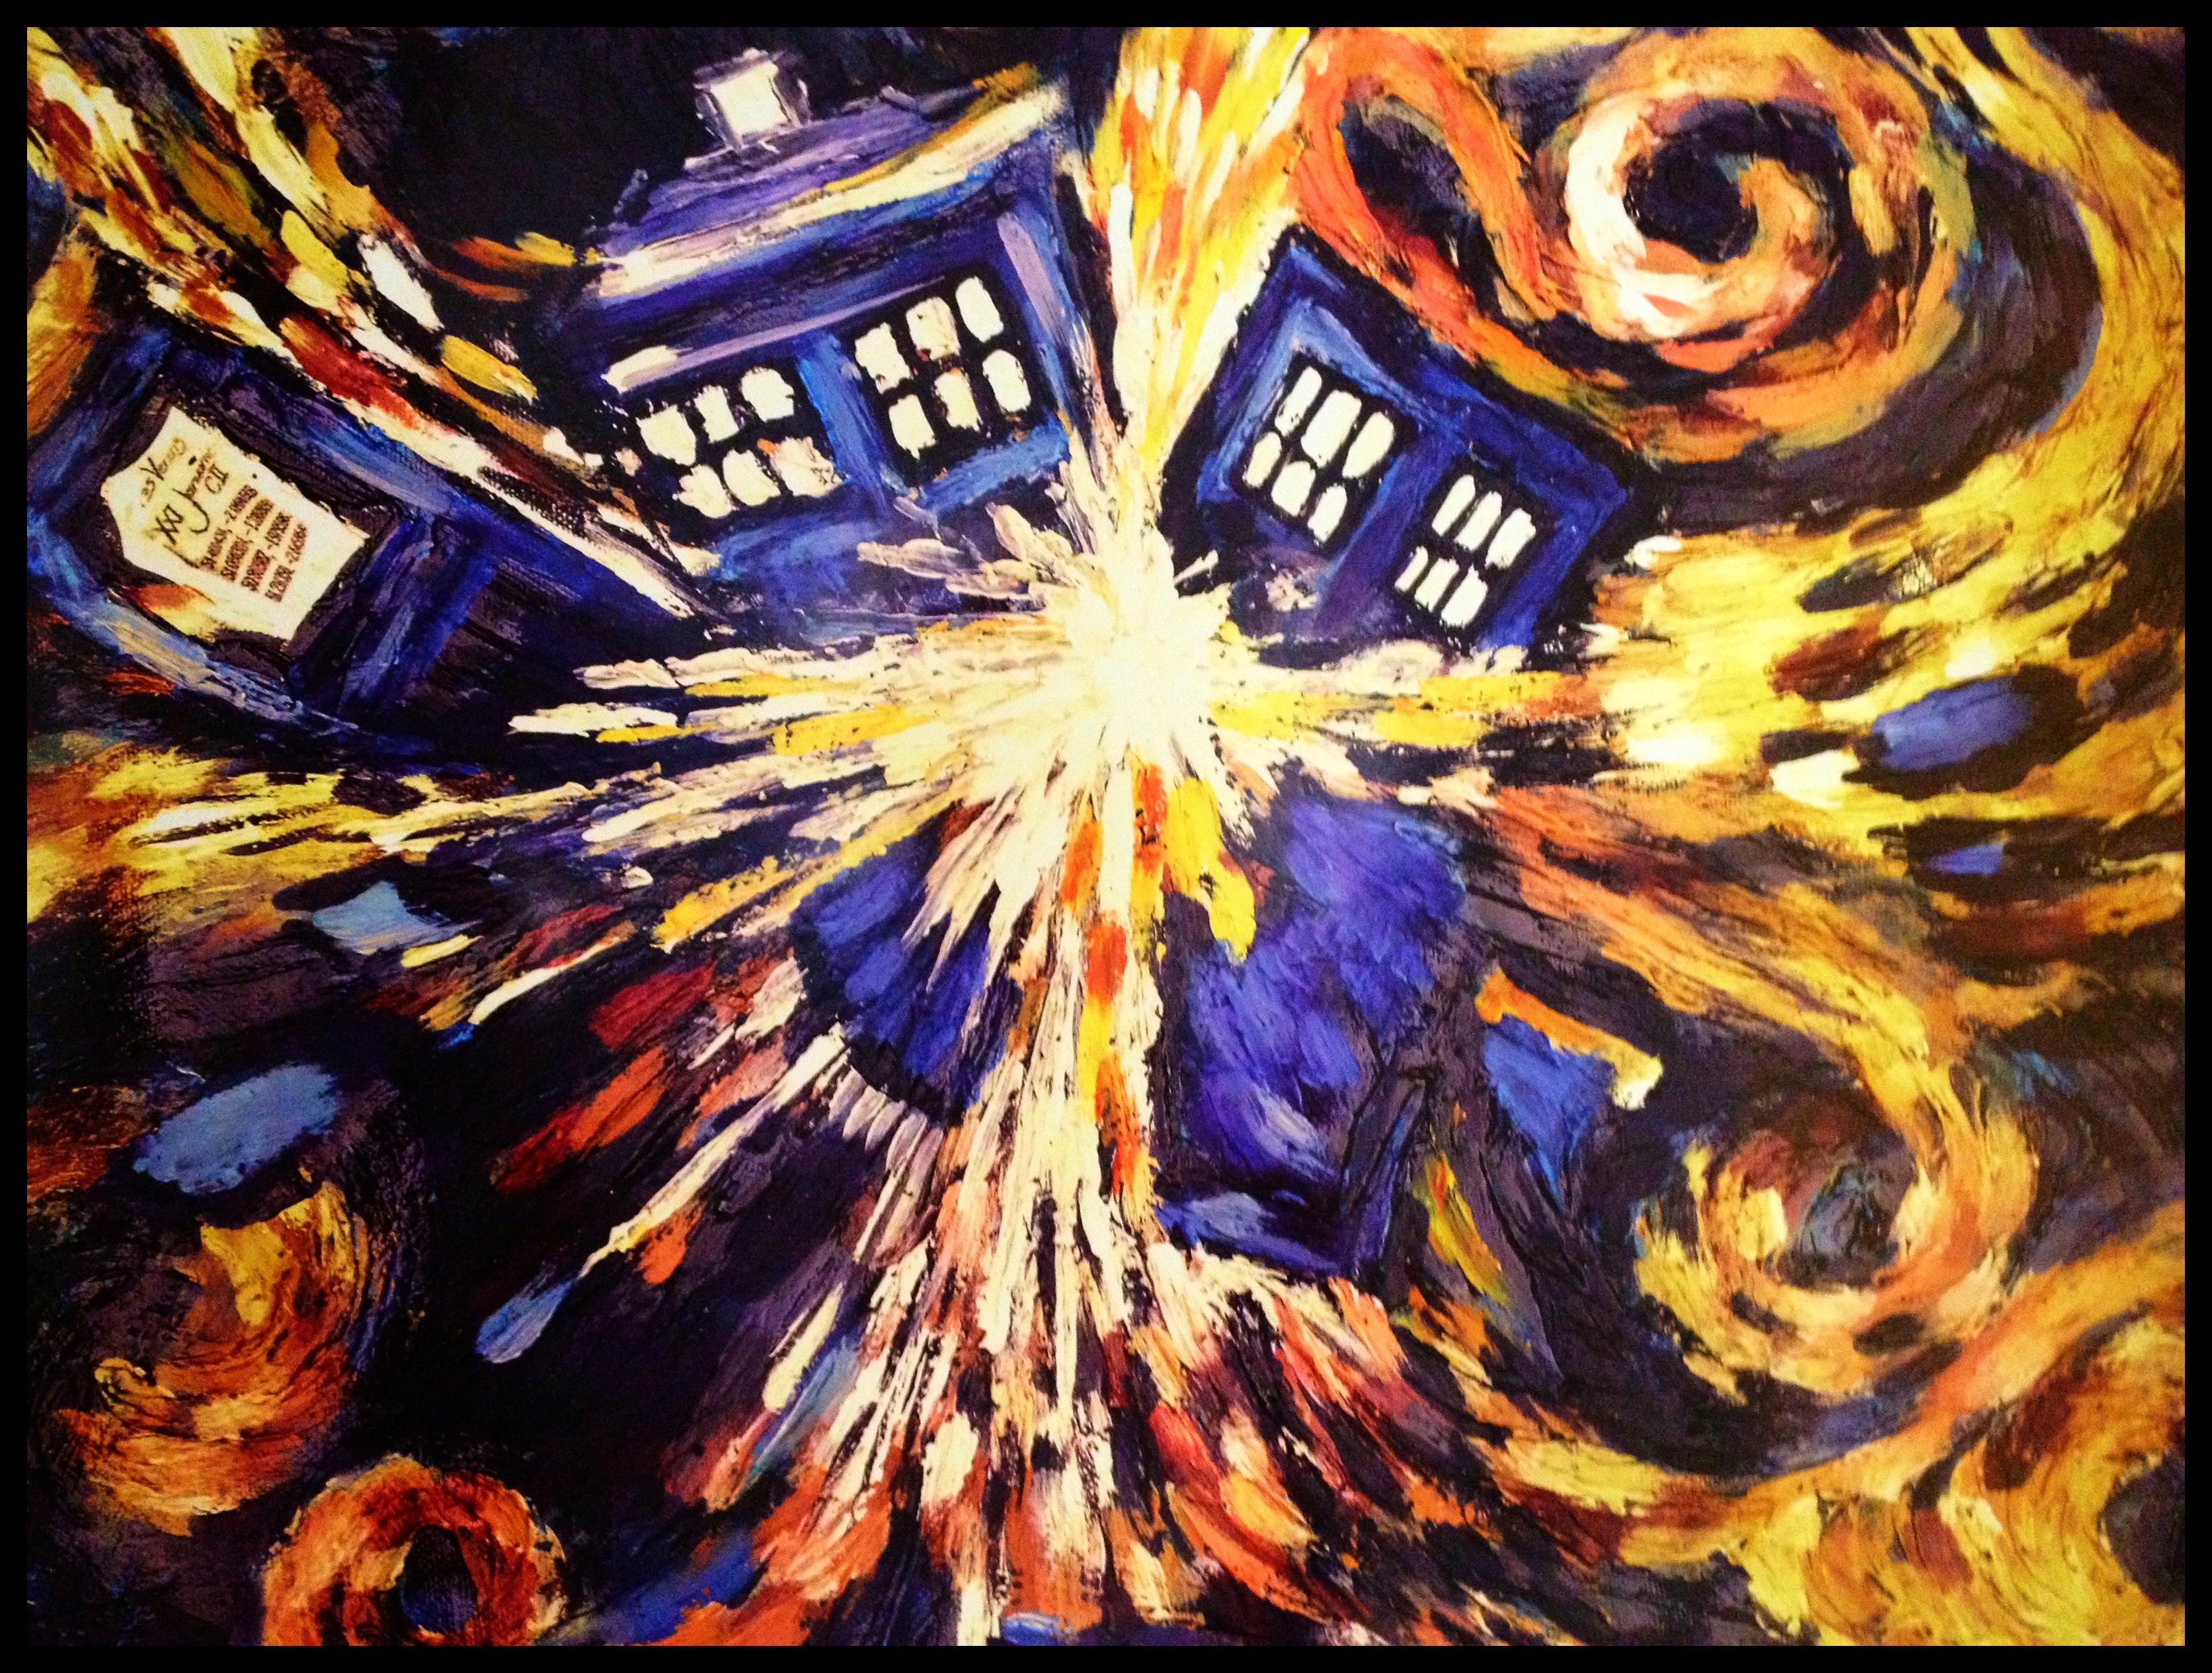 48+] Doctor Who Van Gogh Wallpaper on